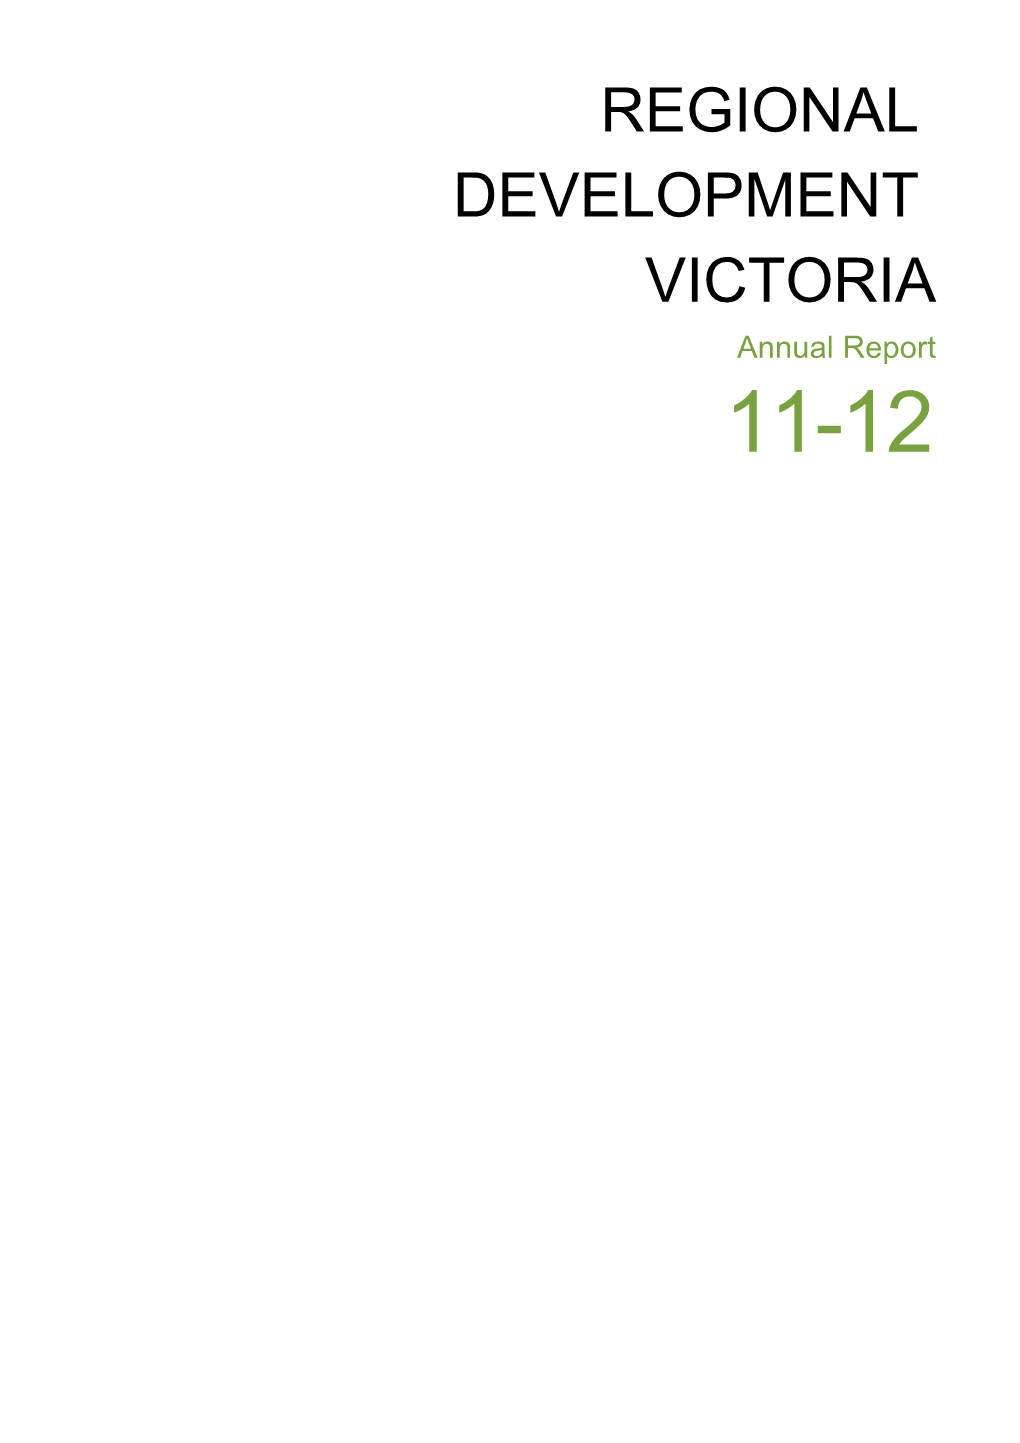 Regional Development Victoria Annual Report 2011-2012